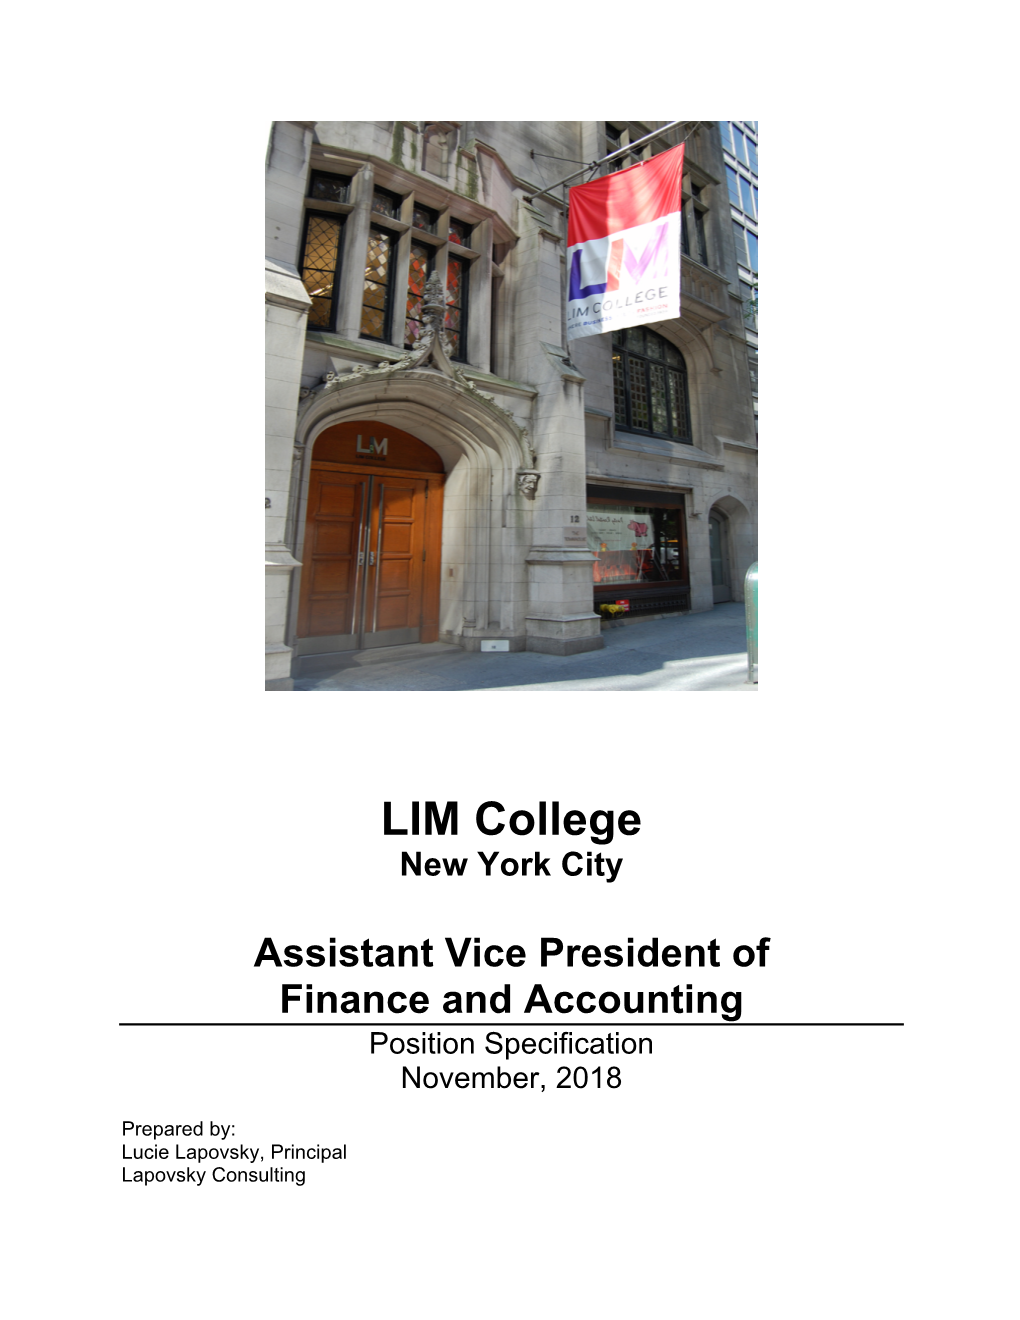 LIM College New York City